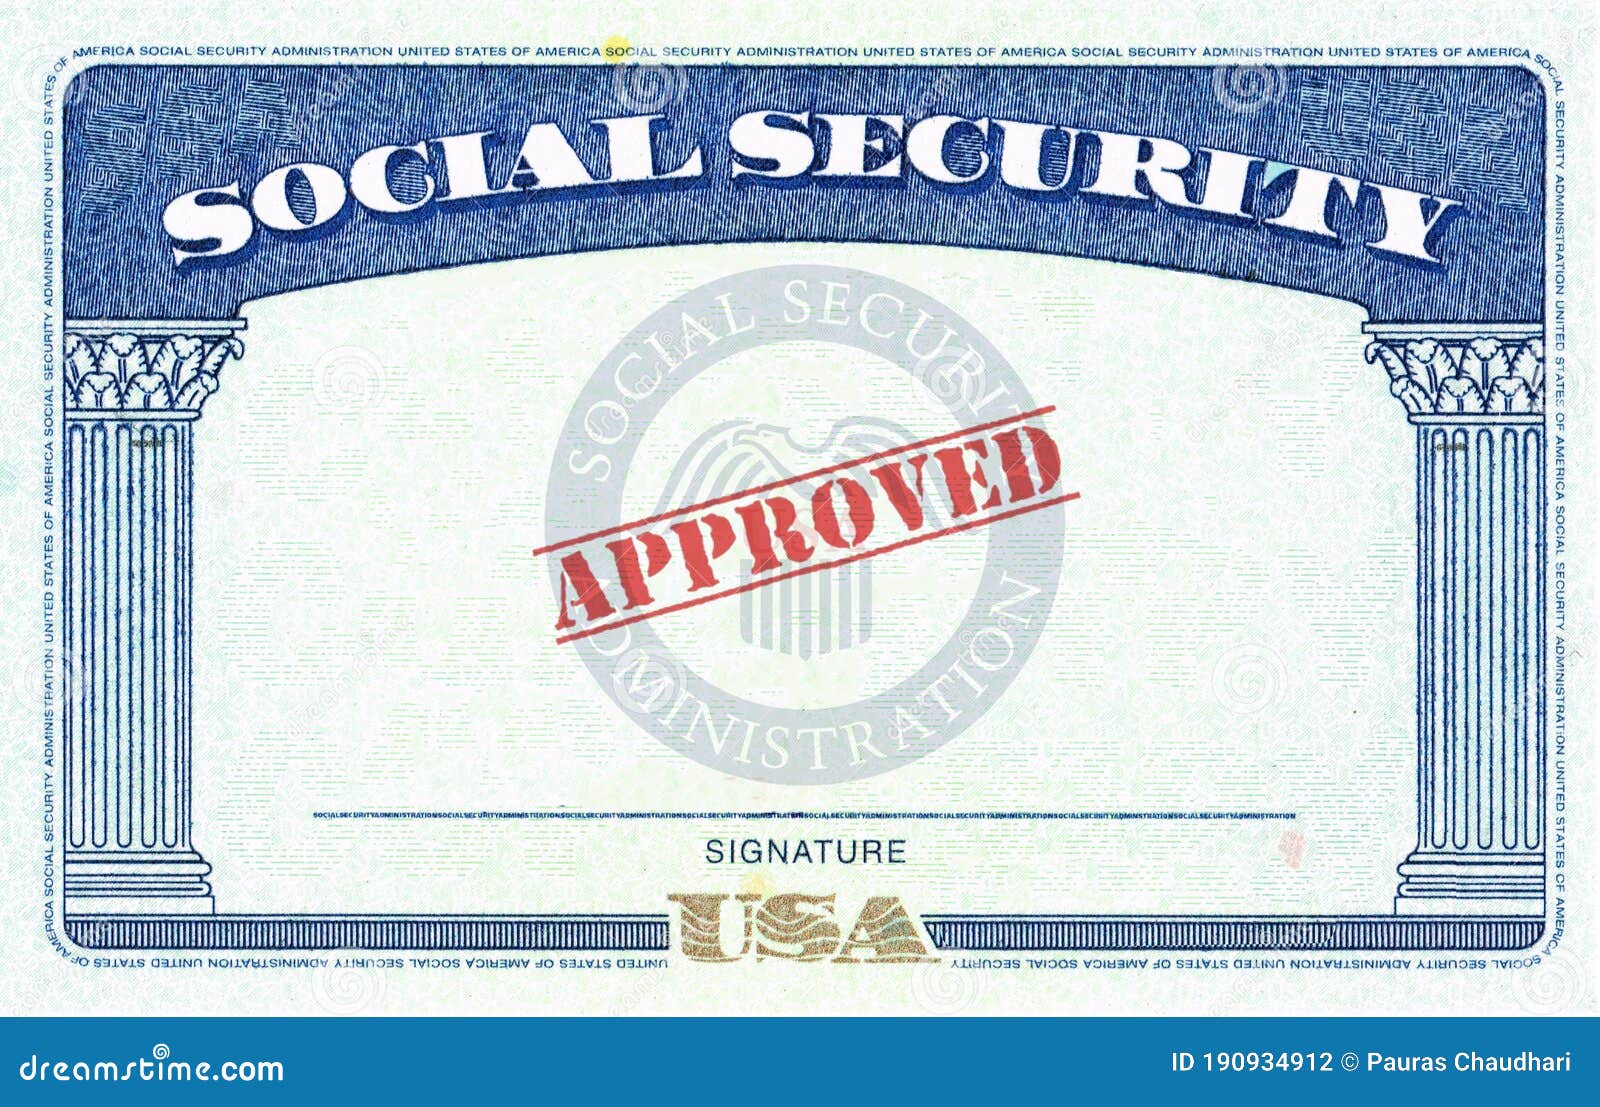 Social Security Card Template Photos - Free & Royalty-Free Stock Throughout Social Security Card Template Pdf